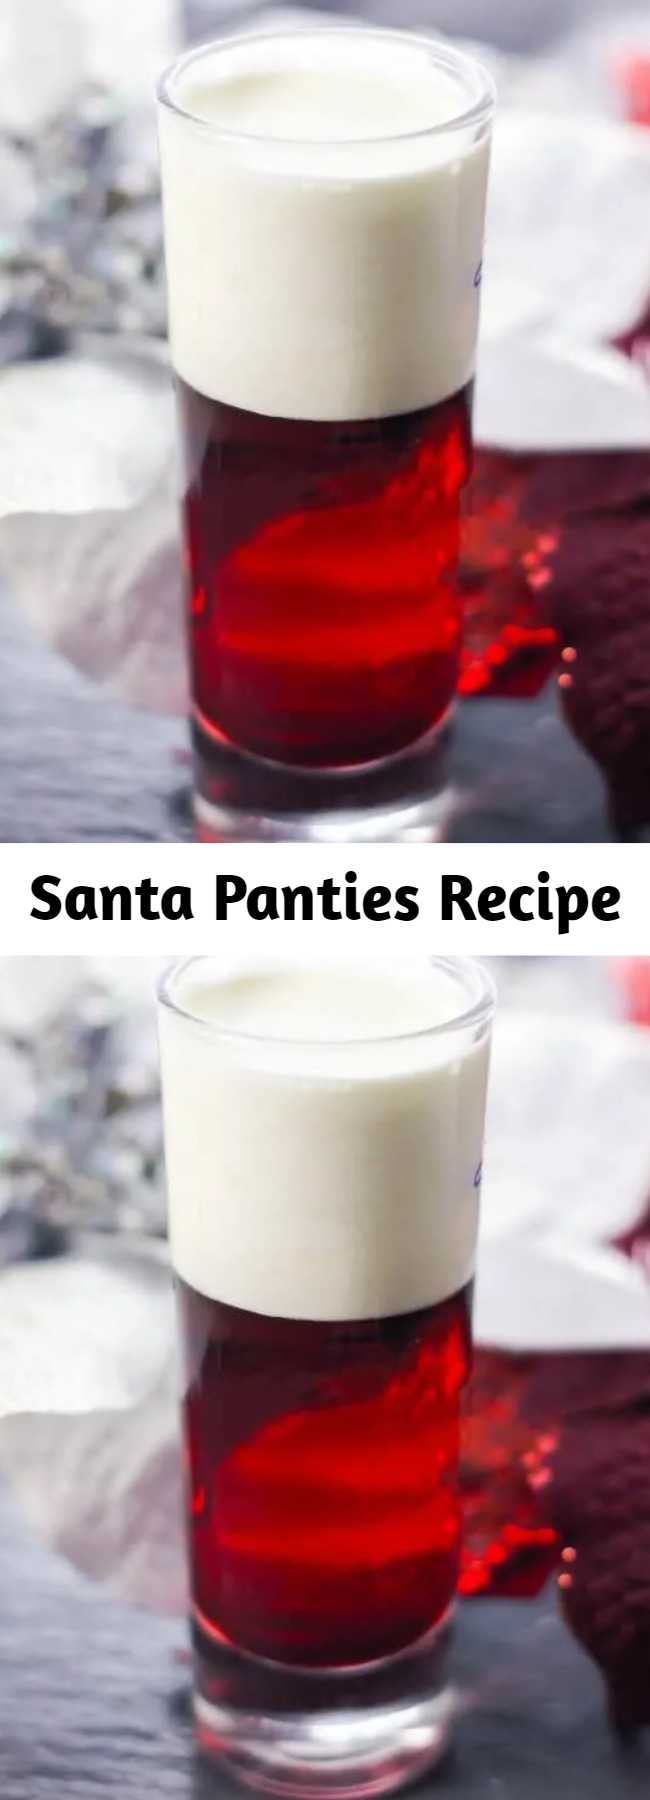 Santa Panties Recipe - Santa Panties is fun Christmas shot. These layered shots will be the signature drink of your holiday party. This Rumchata shot recipe are fun shots to make!